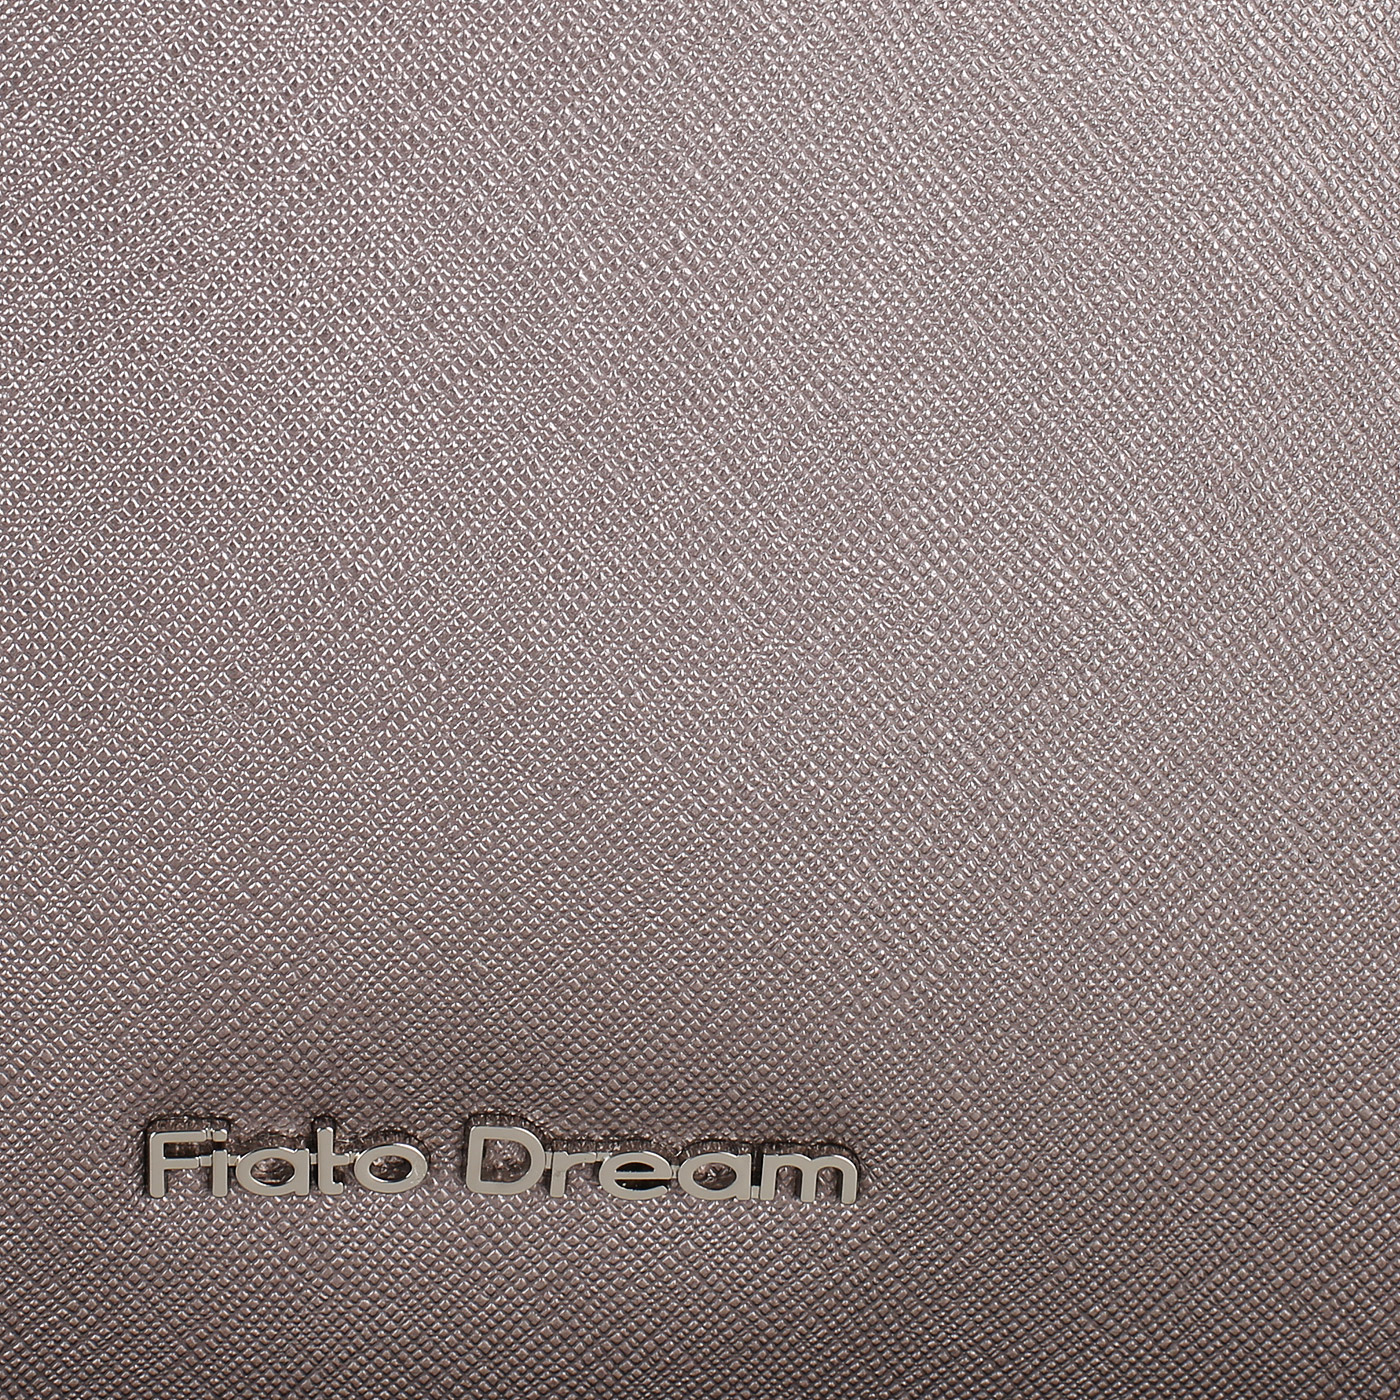 Сумка цвета бронзы Fiato Dream 